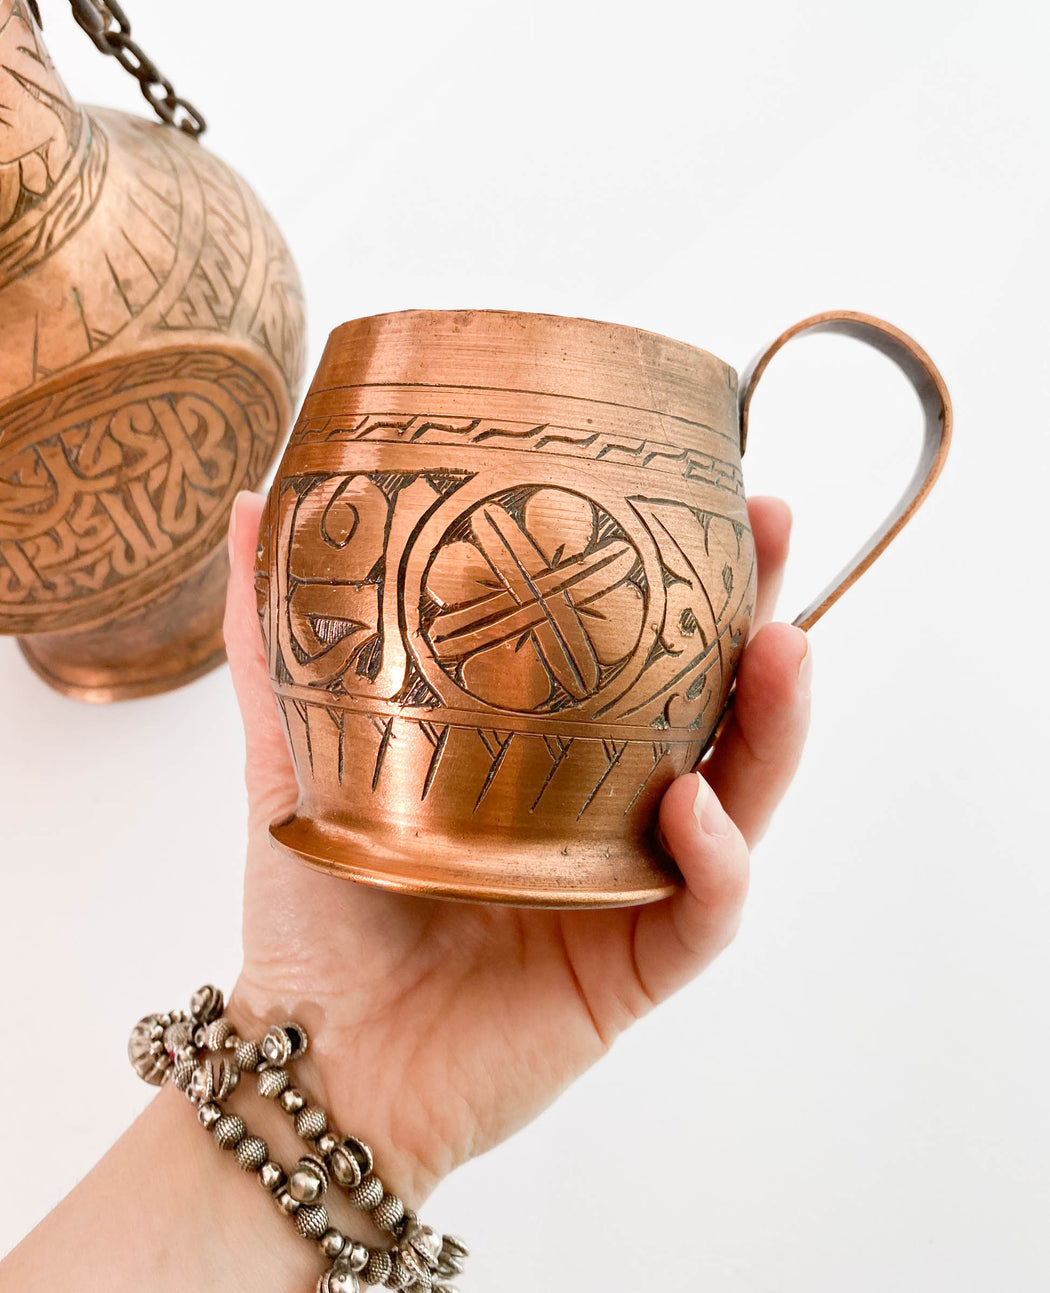 Antique Copper Pitcher and Mug